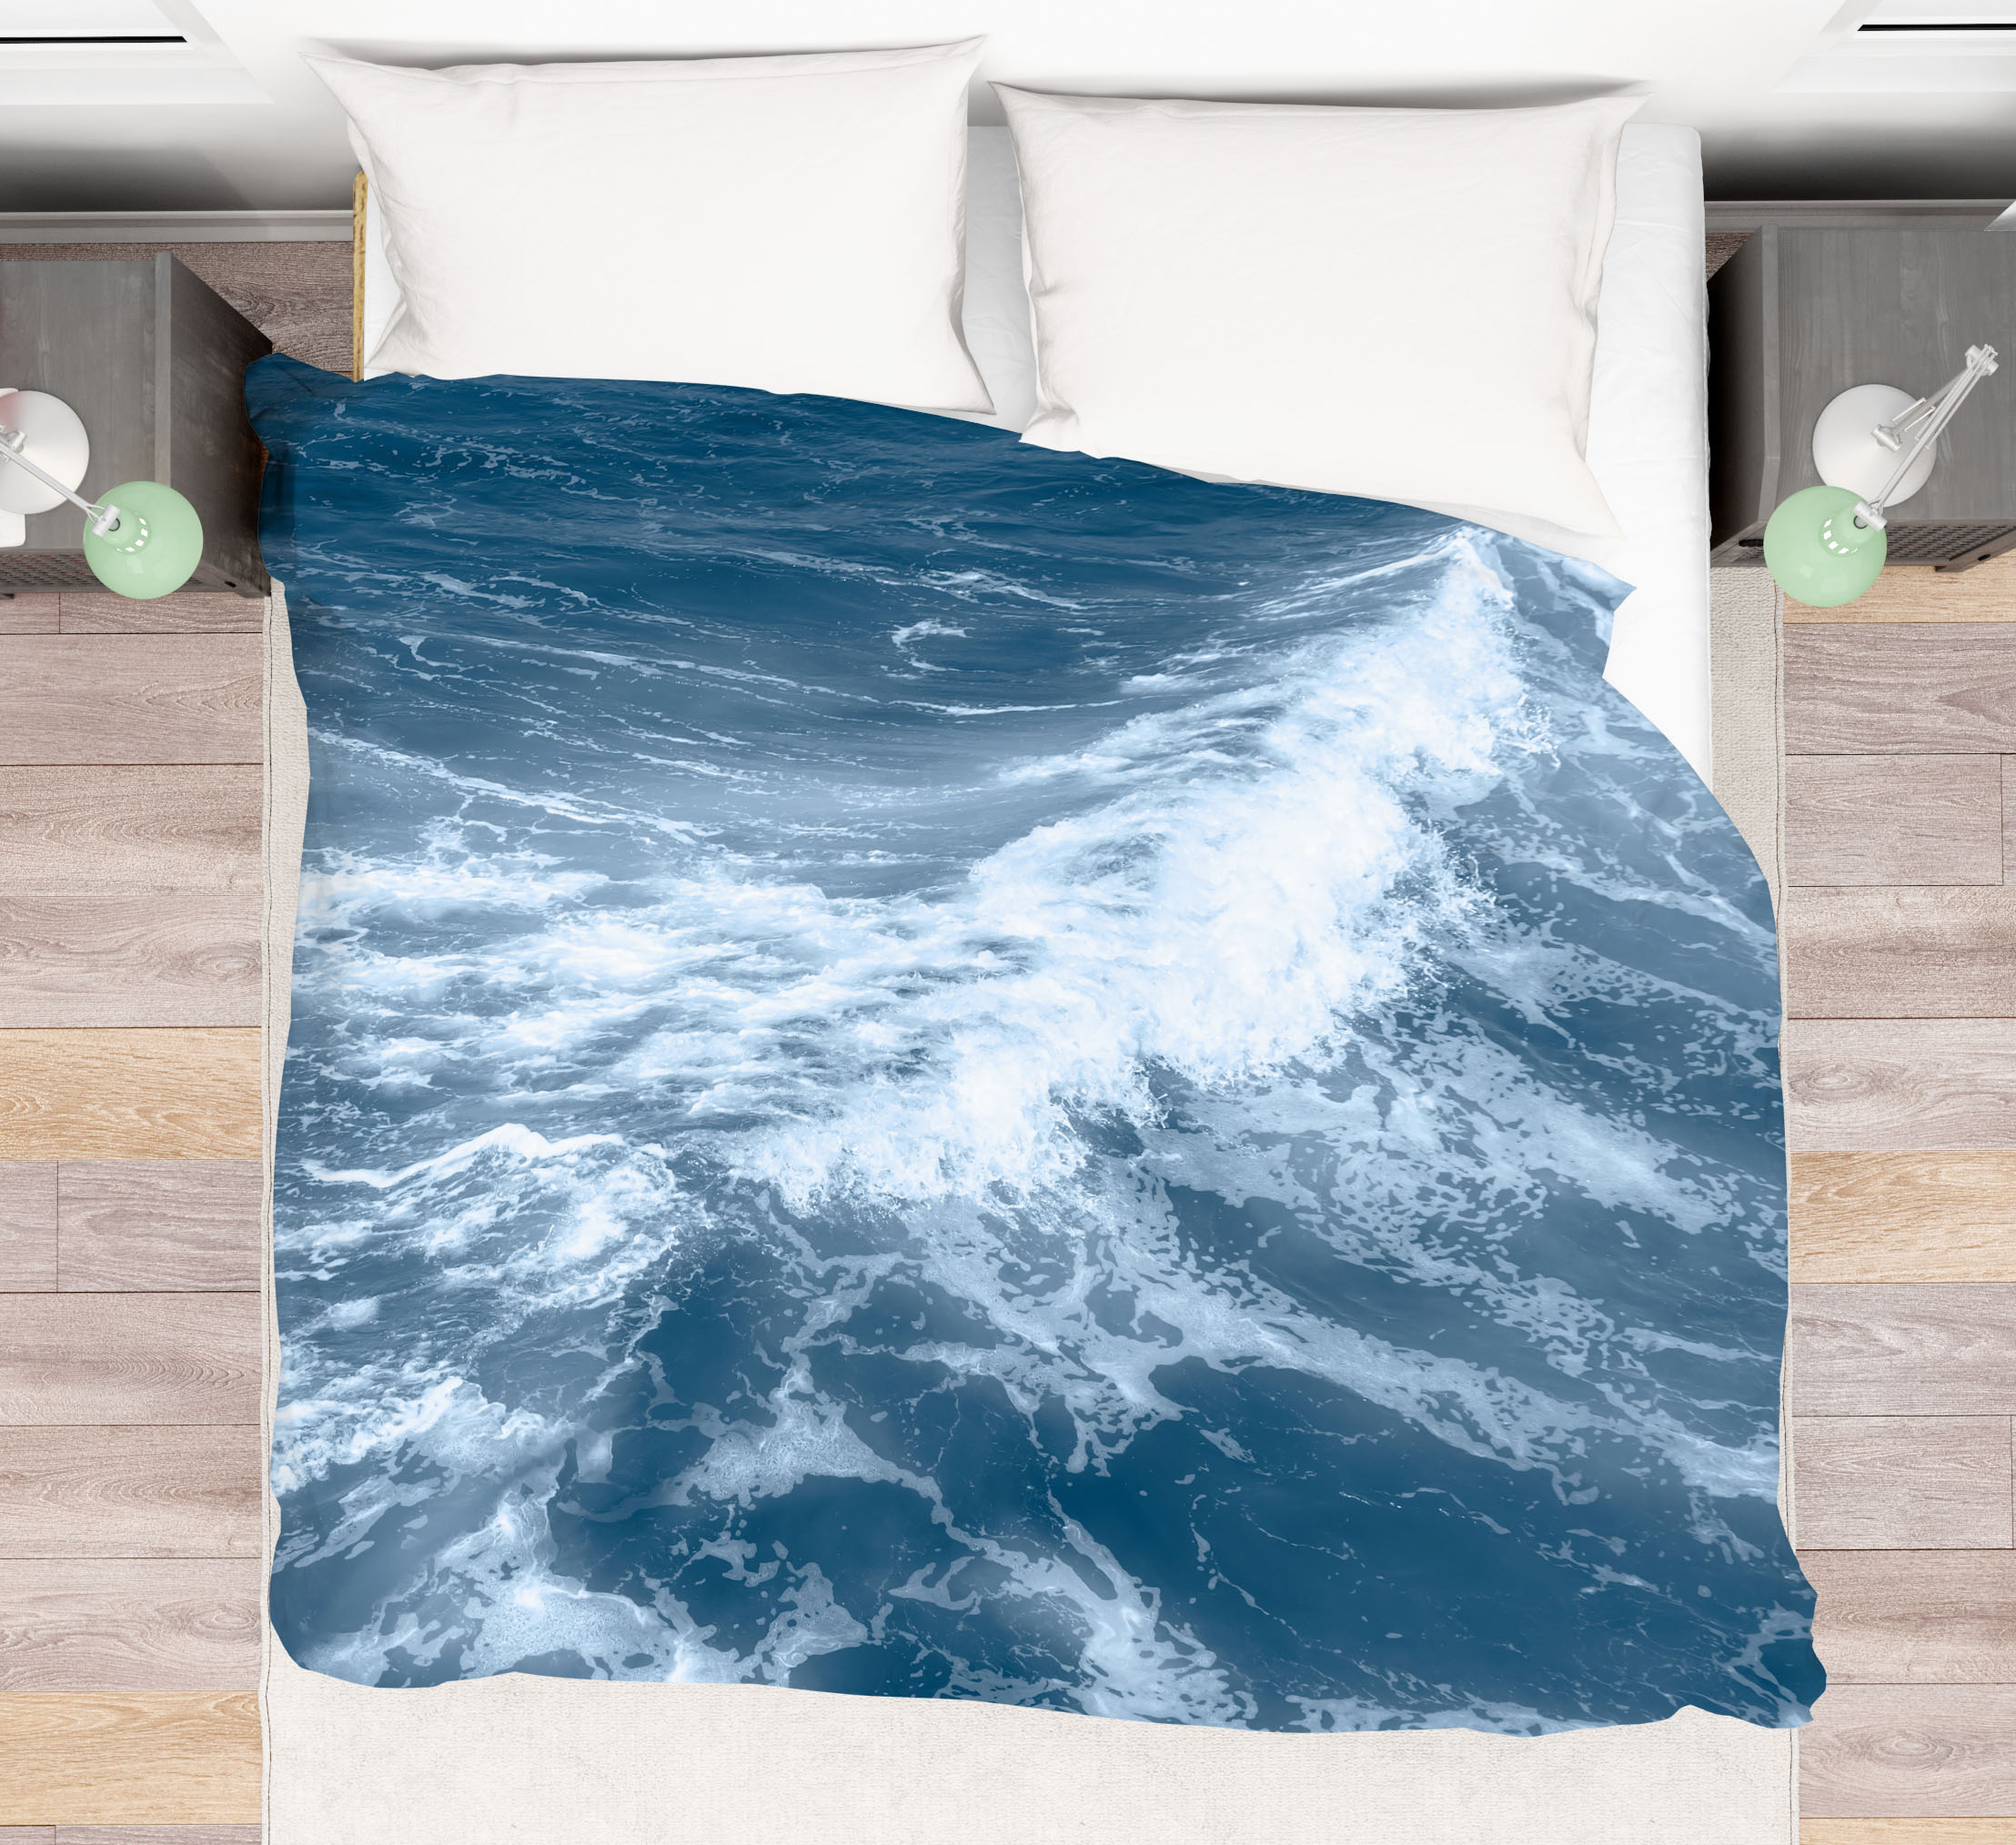 Light blue Ocean Duvet Cover Hawaii sea coastal Scandinavian style Bedroom Accent Water Bedding Cover Beach wave aqua white